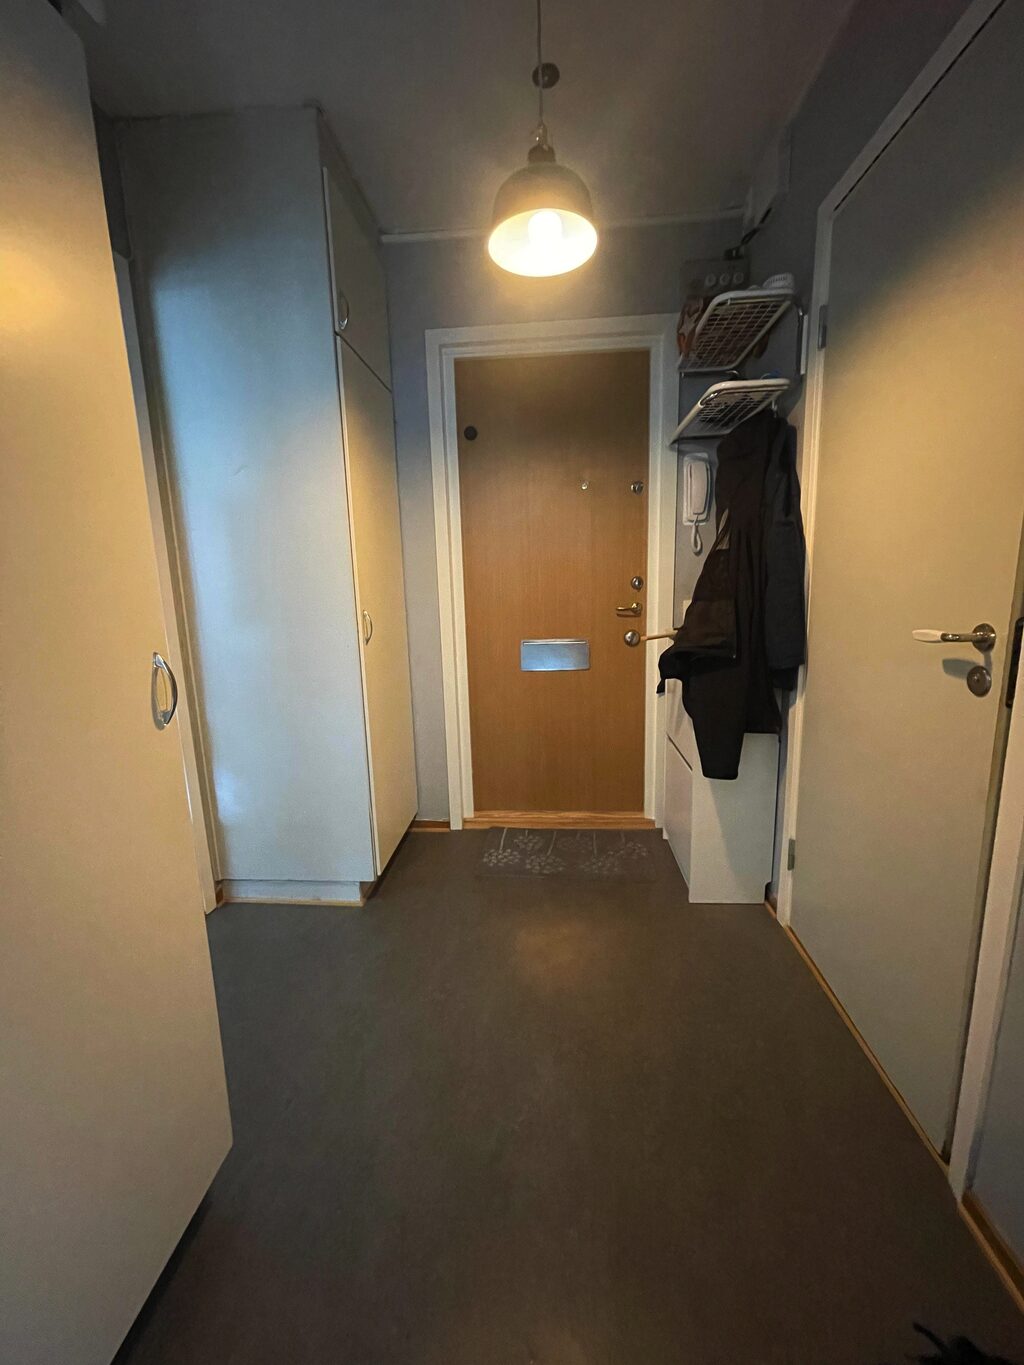 Lägenhetsbyte - Landalabergen 14, 411 29 Göteborg